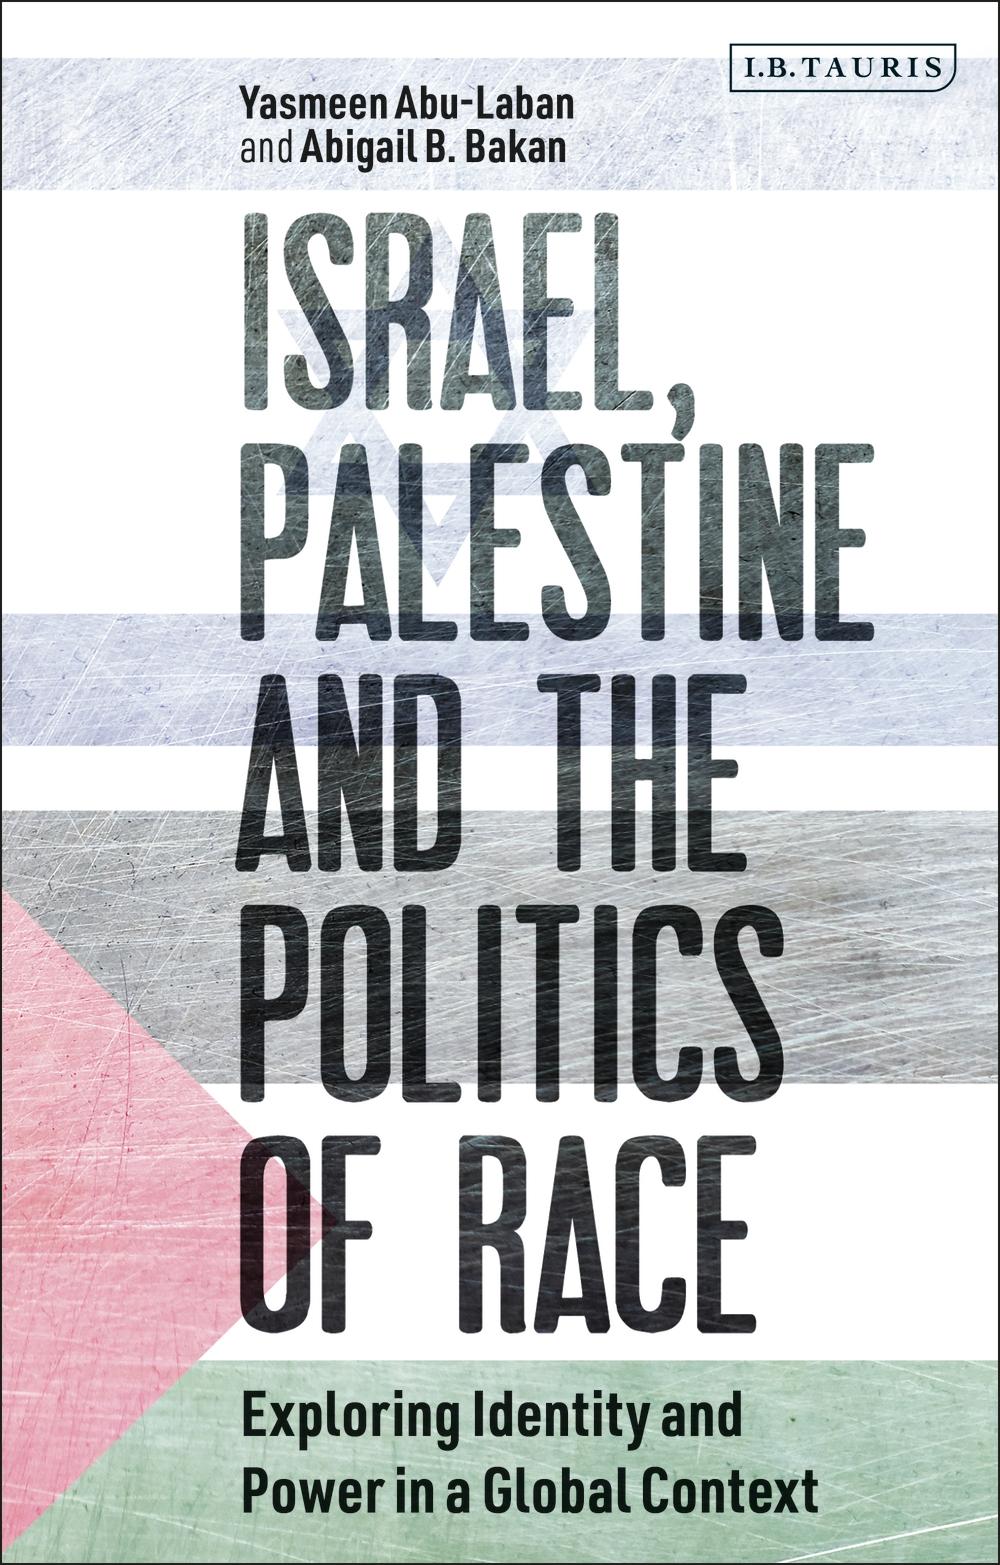 Israel, Palestine and the Politics of Race - Yasmeen Abu Laban